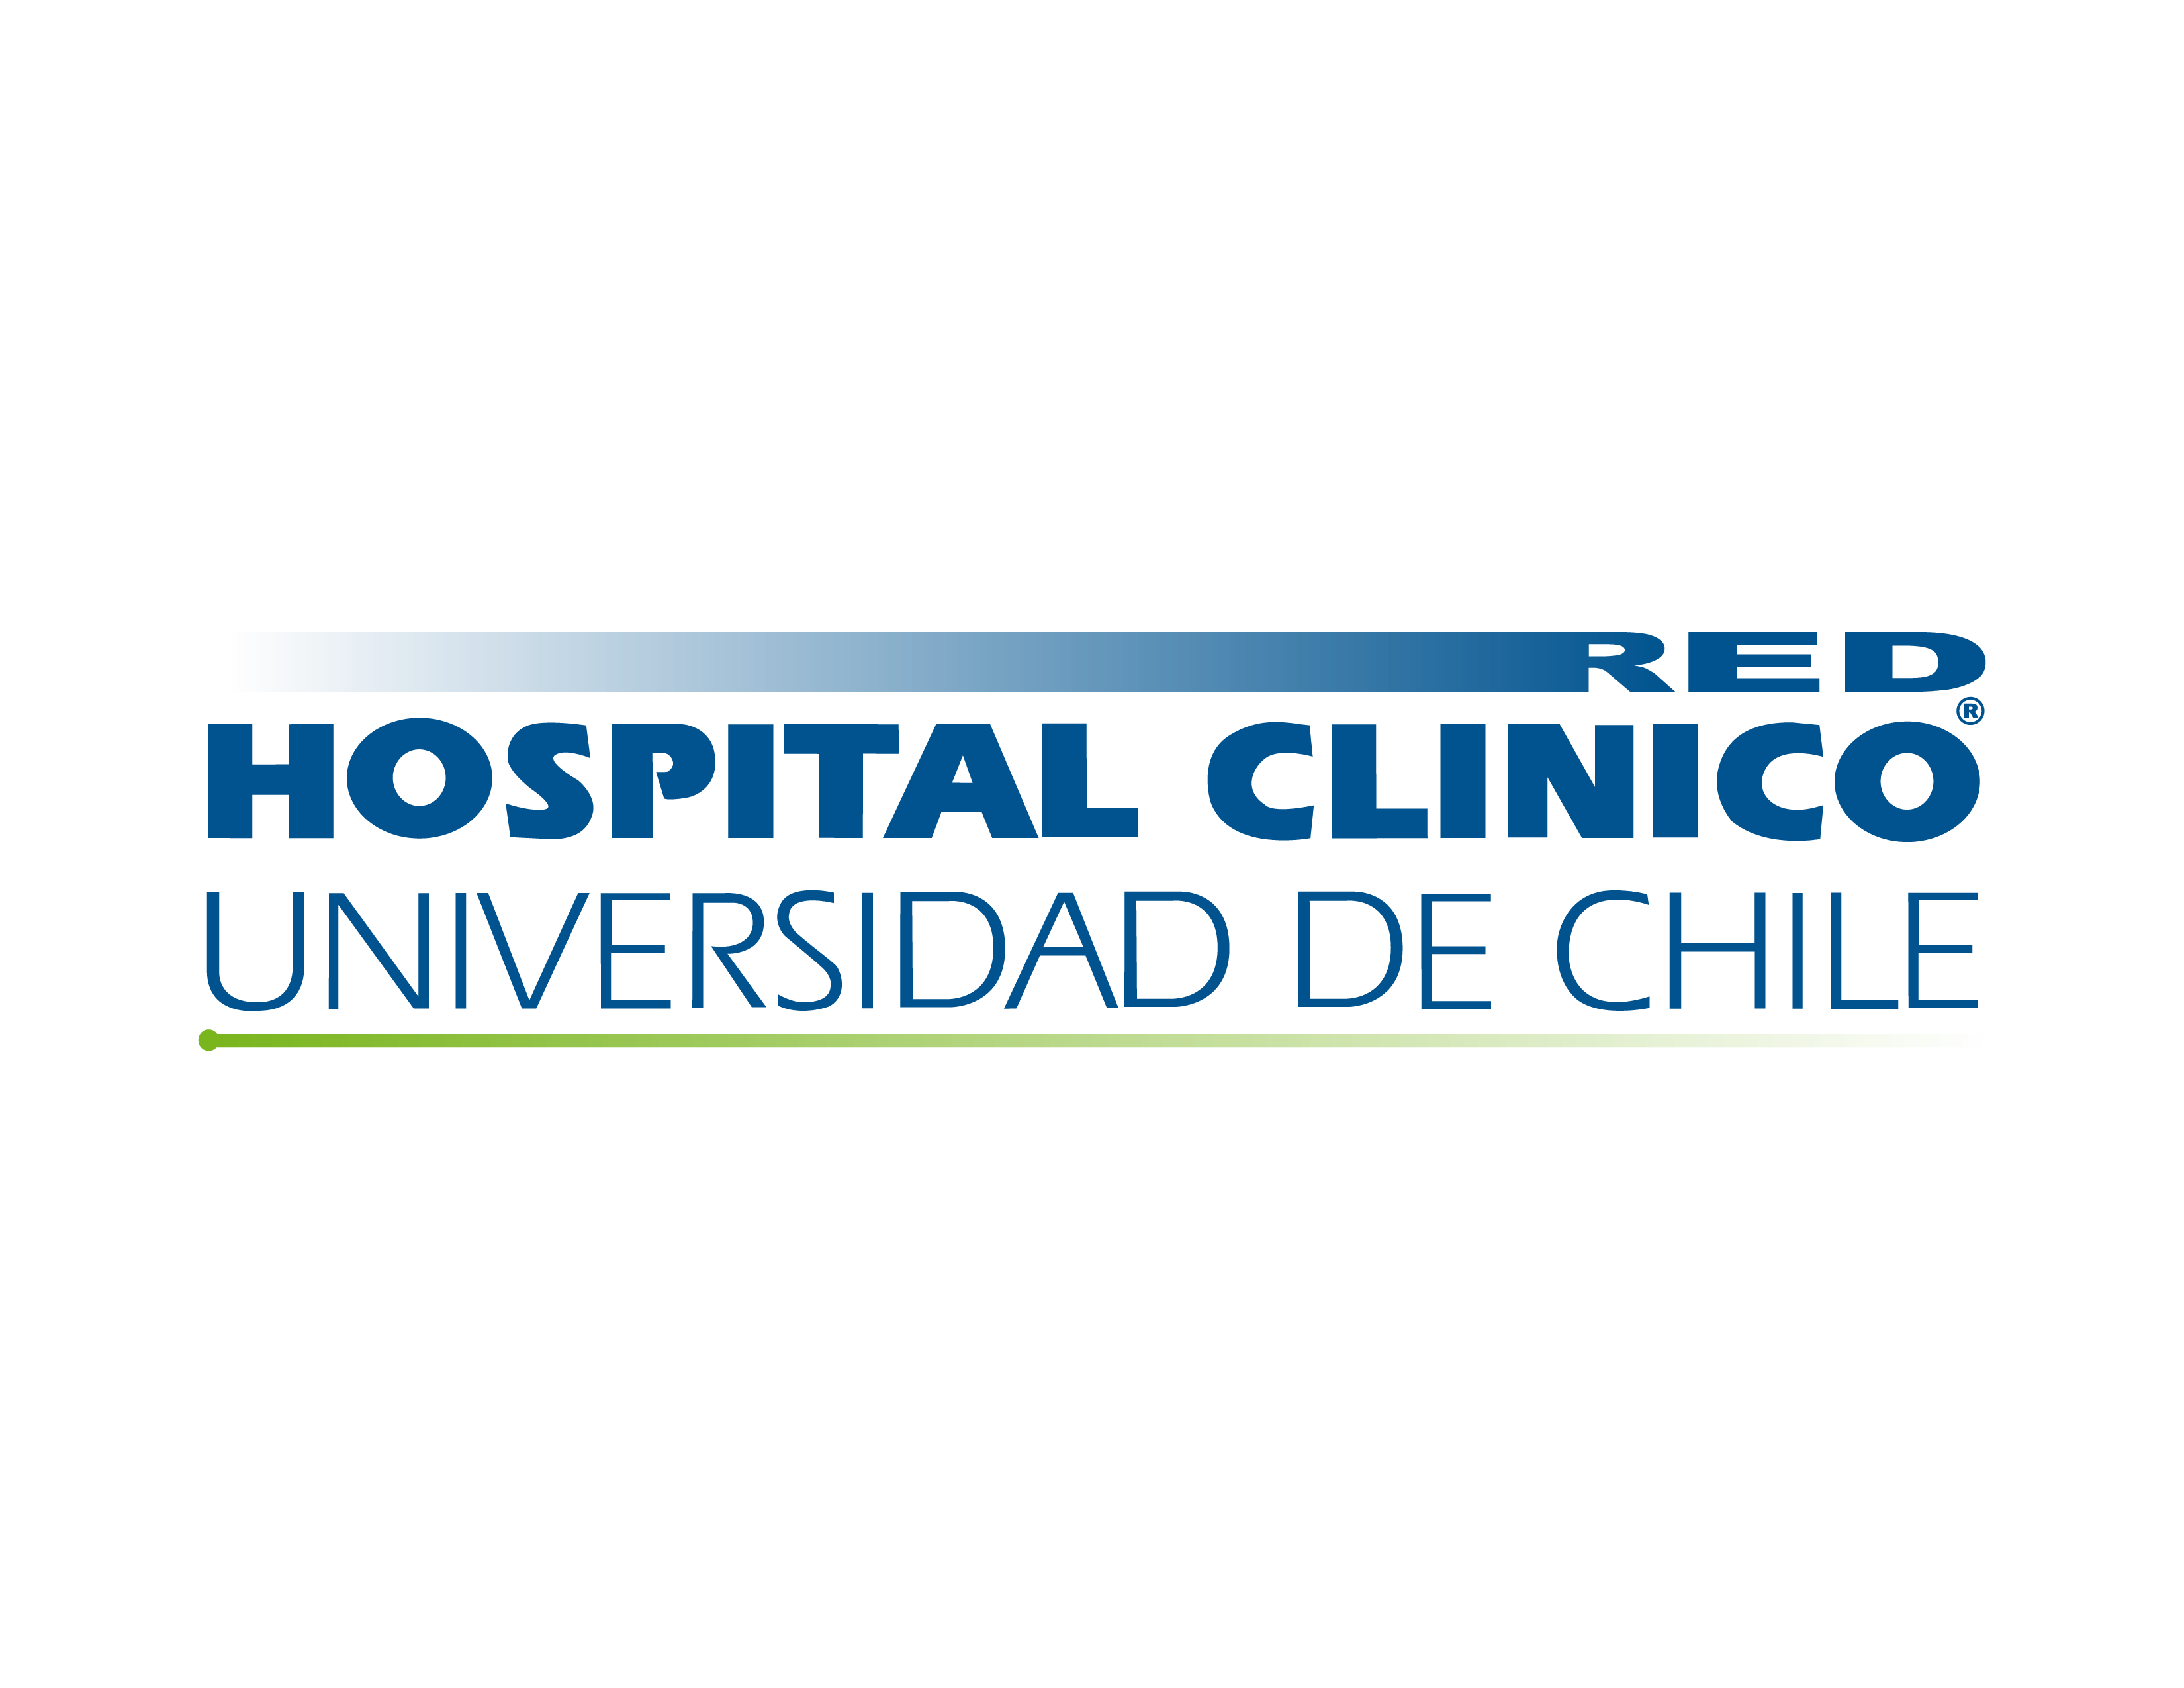 LOGO_HOSPITAL_CLINICO_UNIVERSIDAD_DE_CHILE_2021_04_30_563.PNG